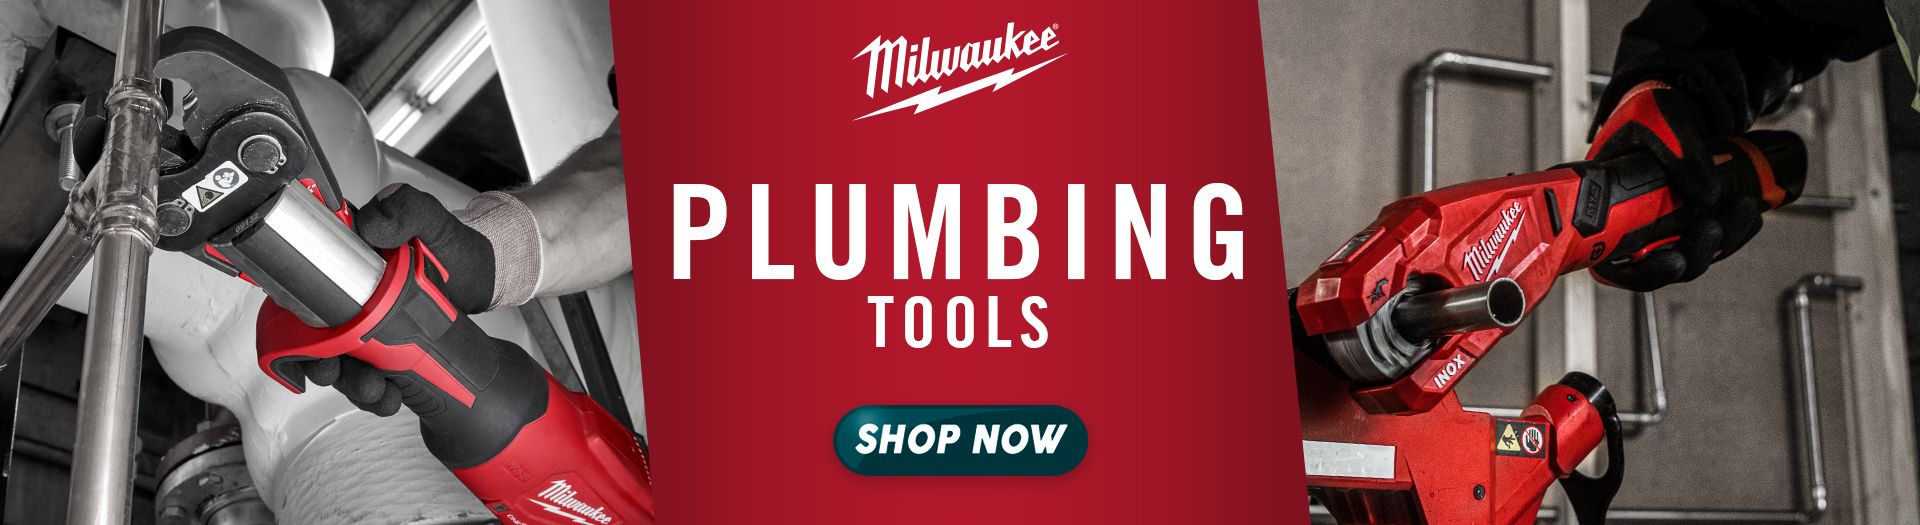 Milwaukee Plumbing Tools